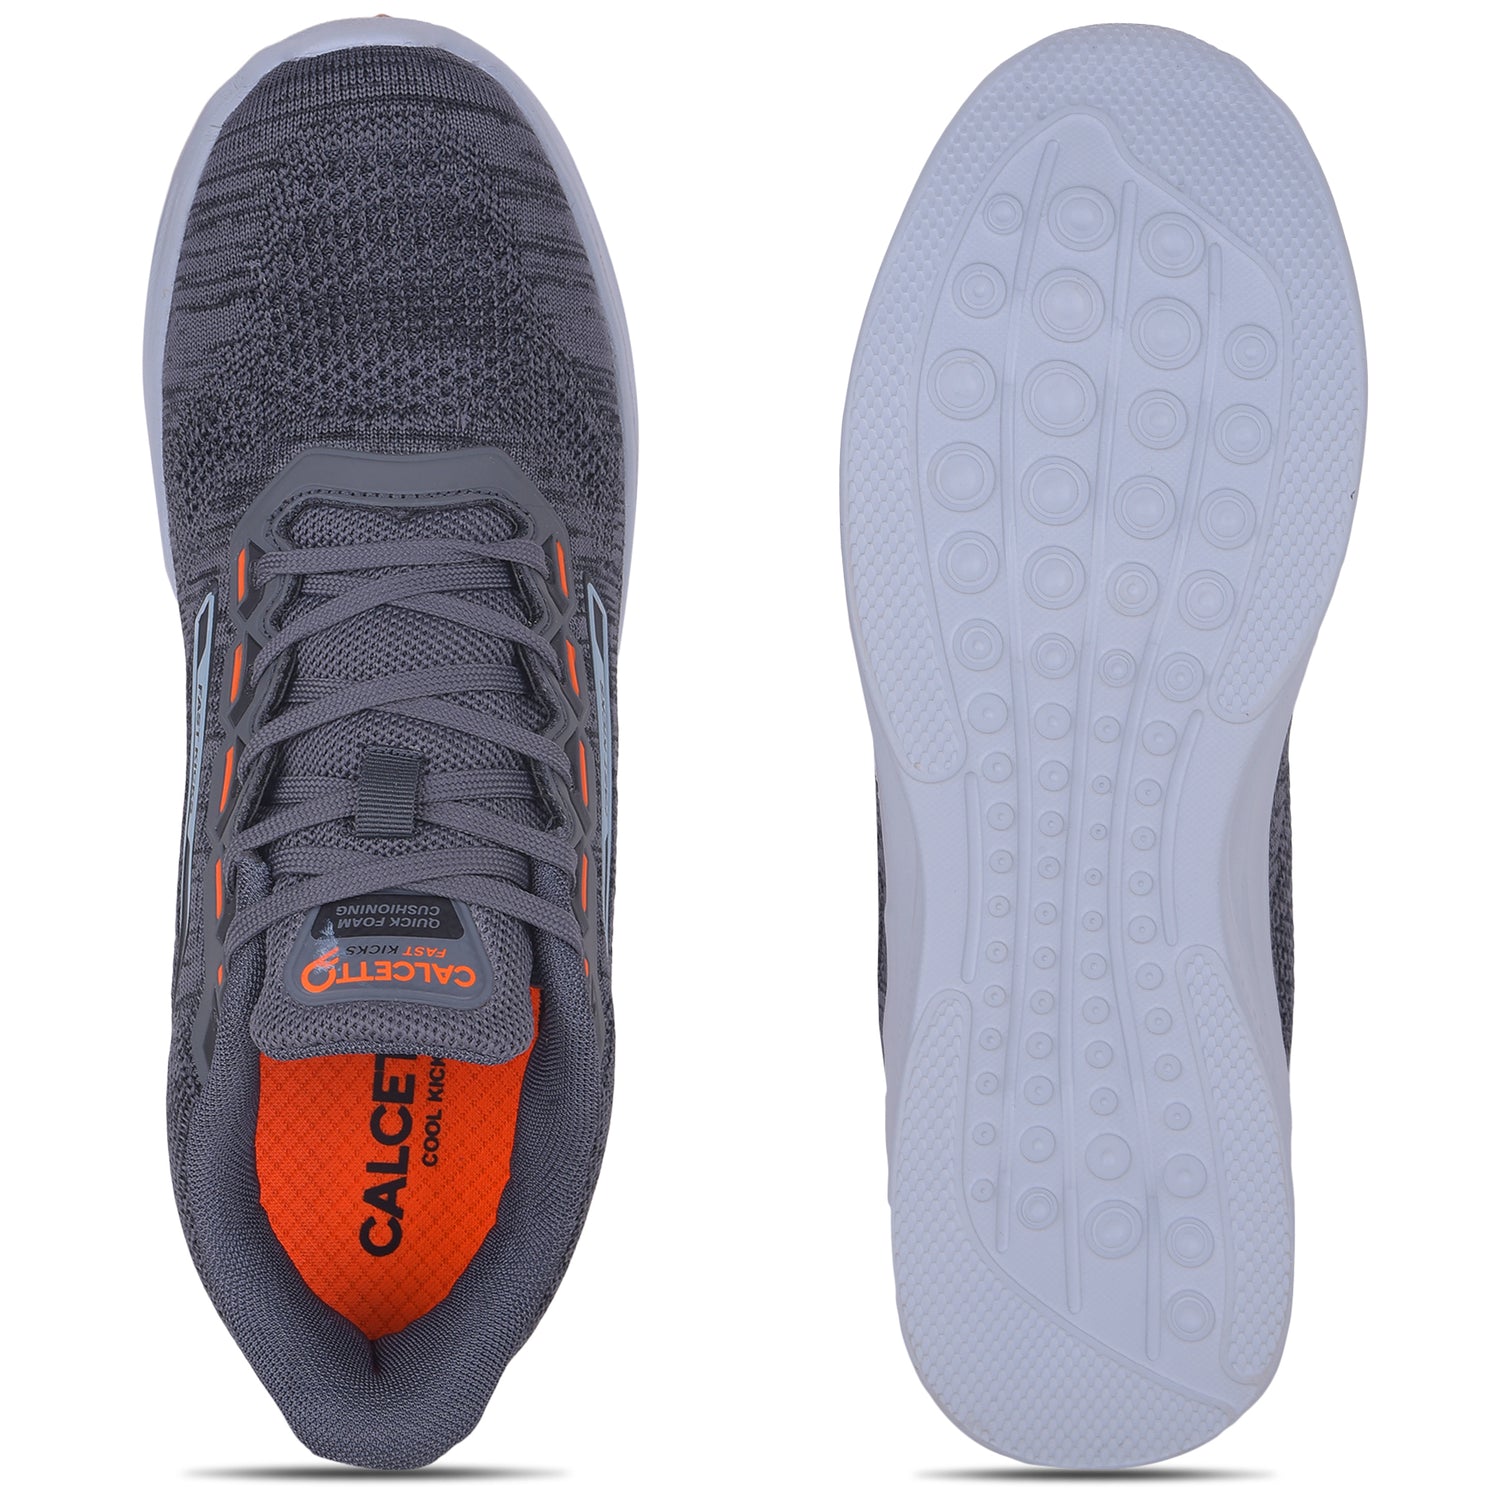 Calcetto CLT-2050 D Grey Men Casual Shoe